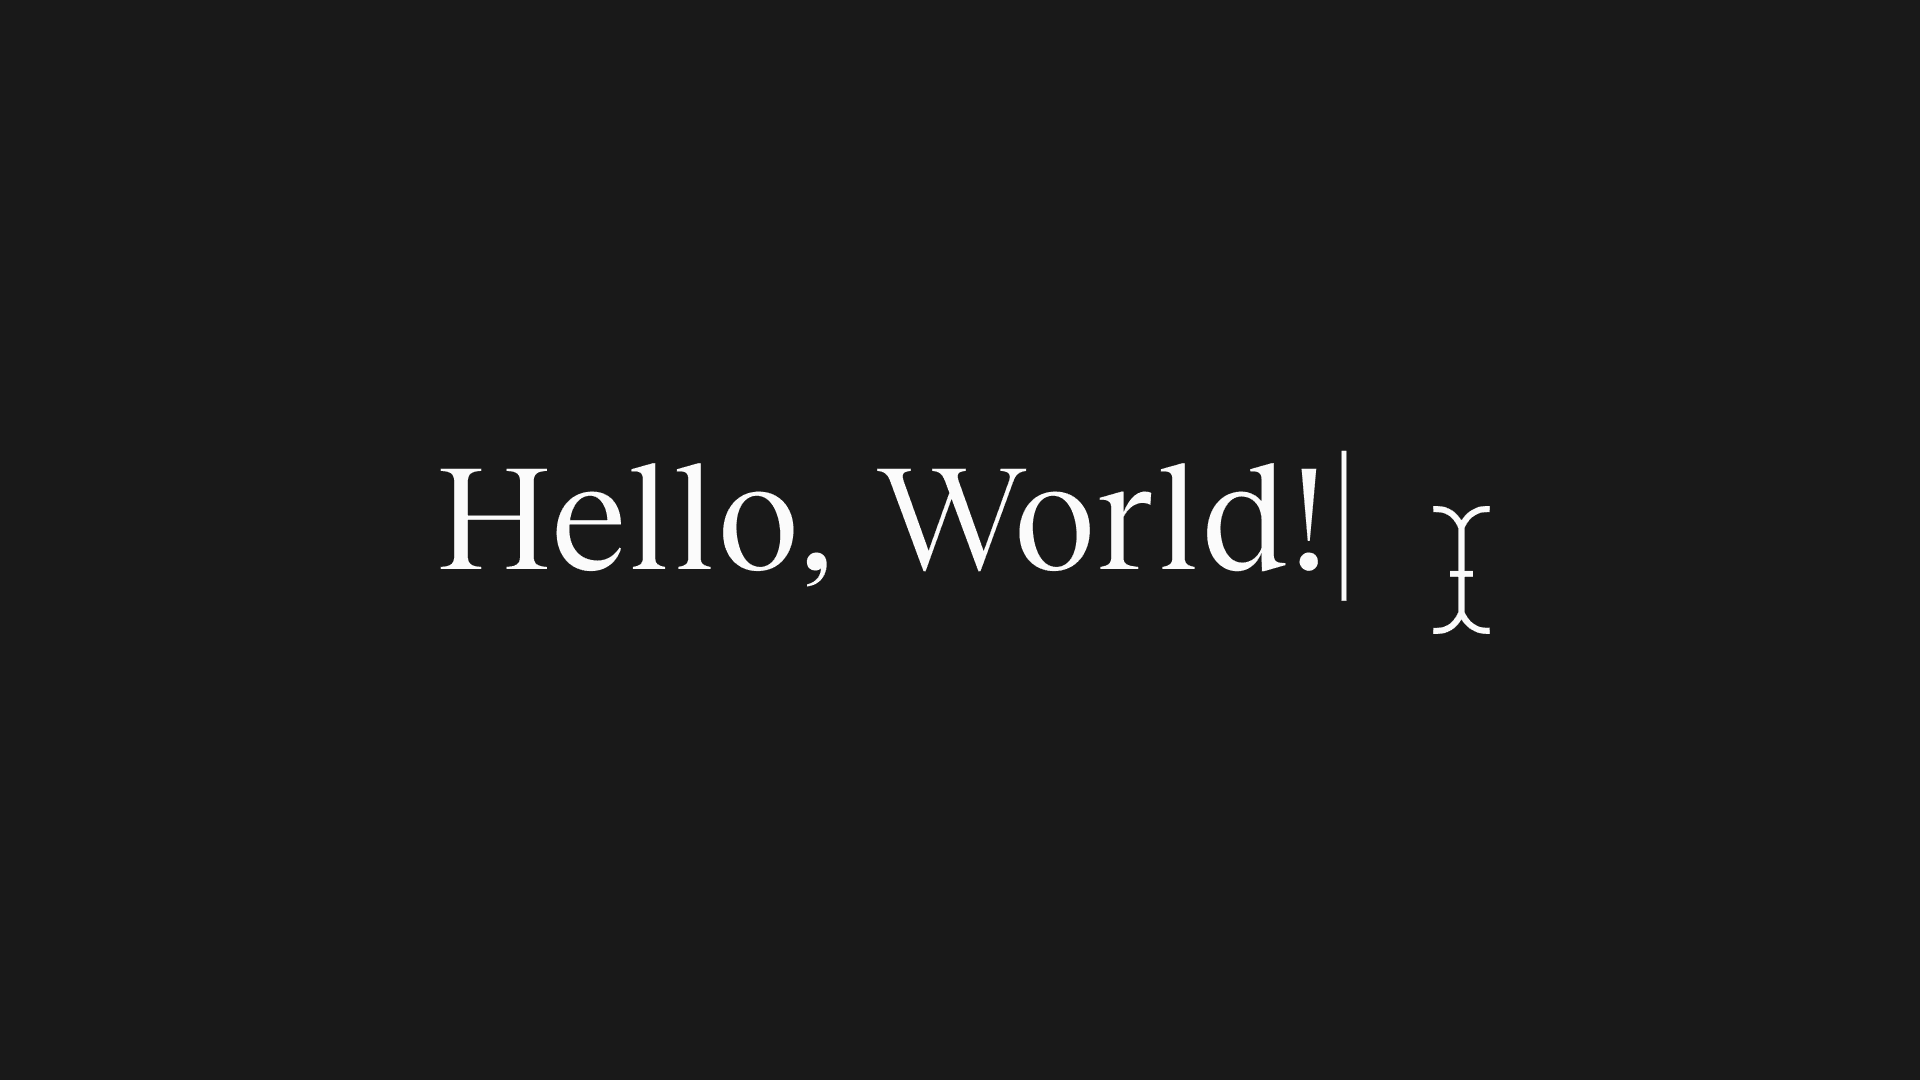 Hello, World! Meet Language AI: Part 1